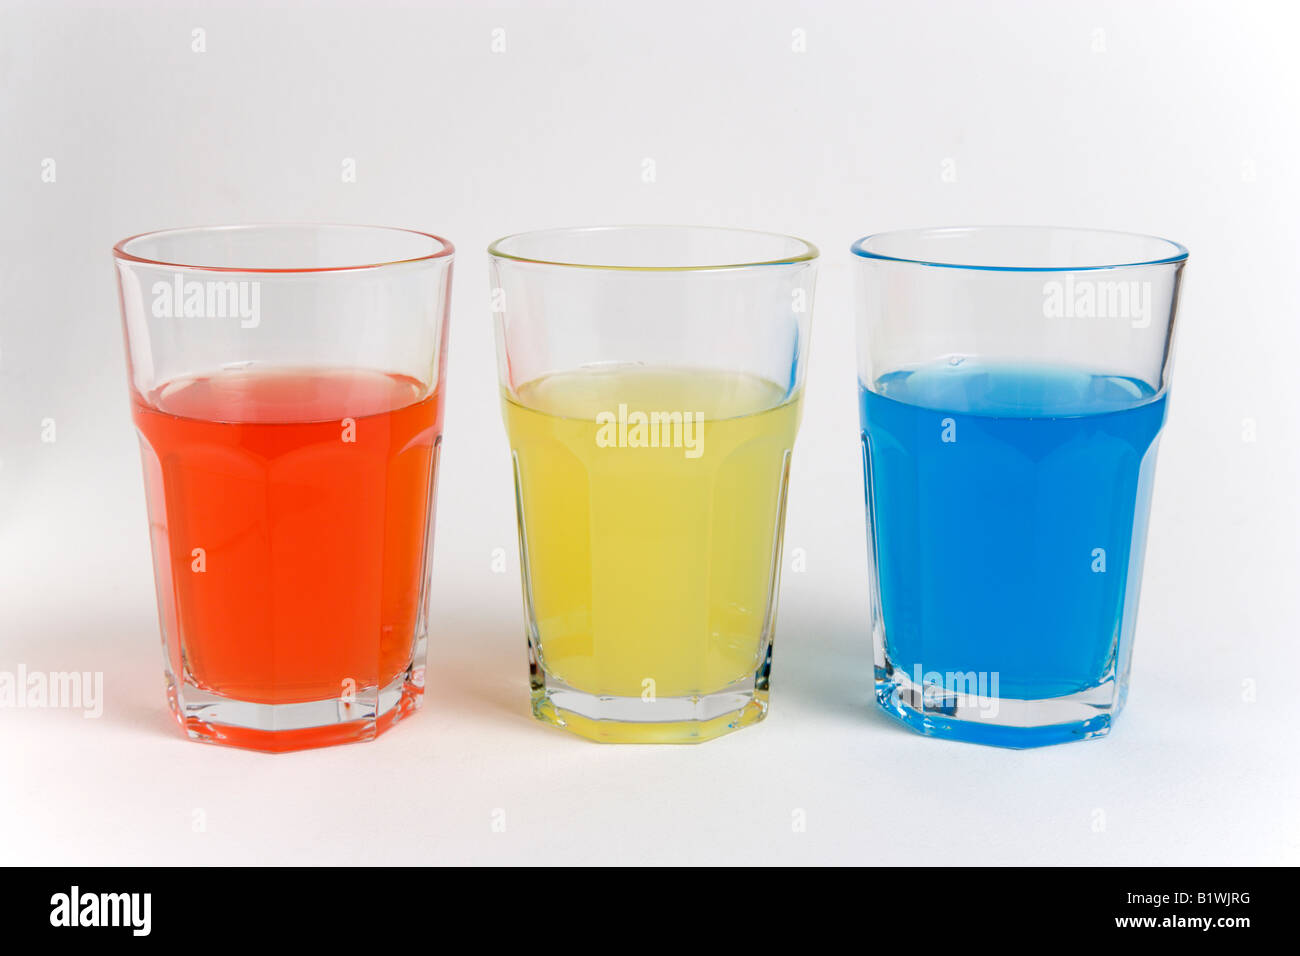 https://c8.alamy.com/comp/B1WJRG/drink-soft-drinks-sugar-soda-glasses-containing-light-red-yellow-and-B1WJRG.jpg